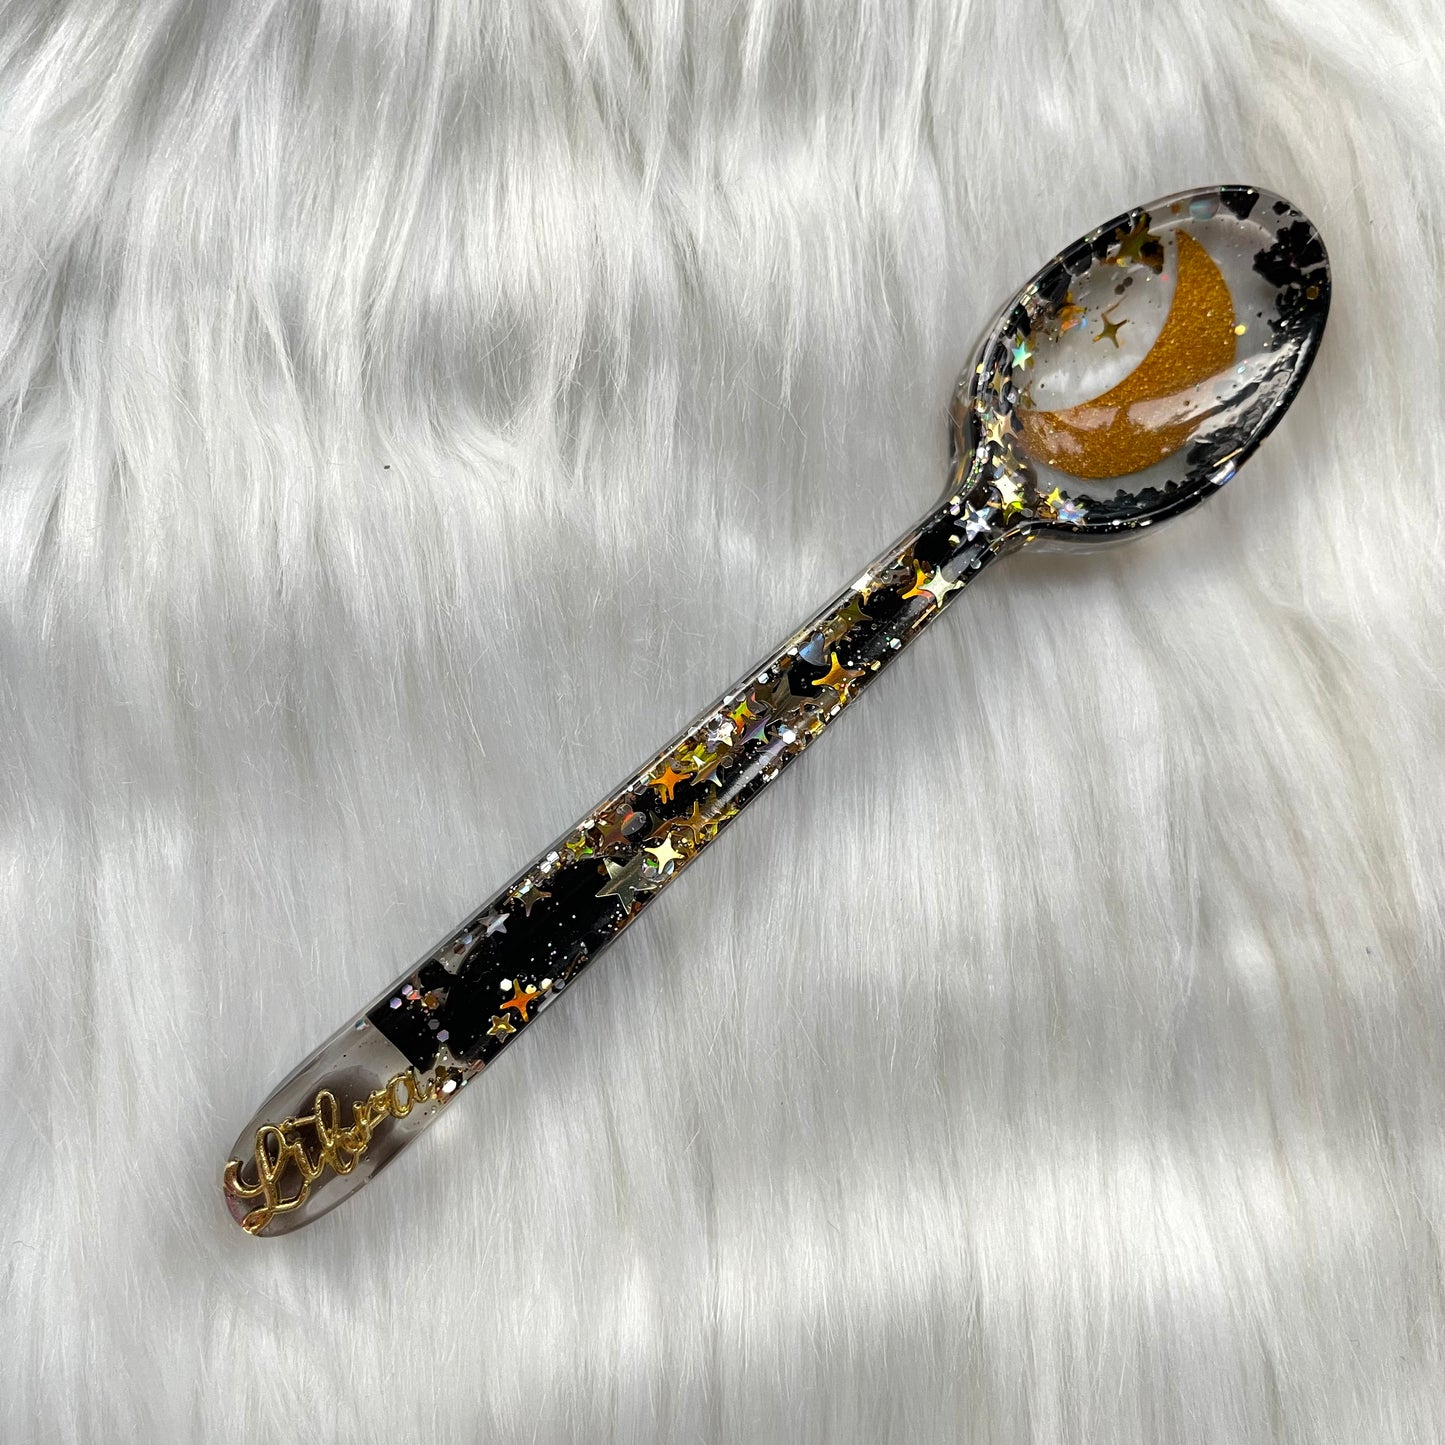 Zodiac Spoon - GOLD - symbolic healing spoon